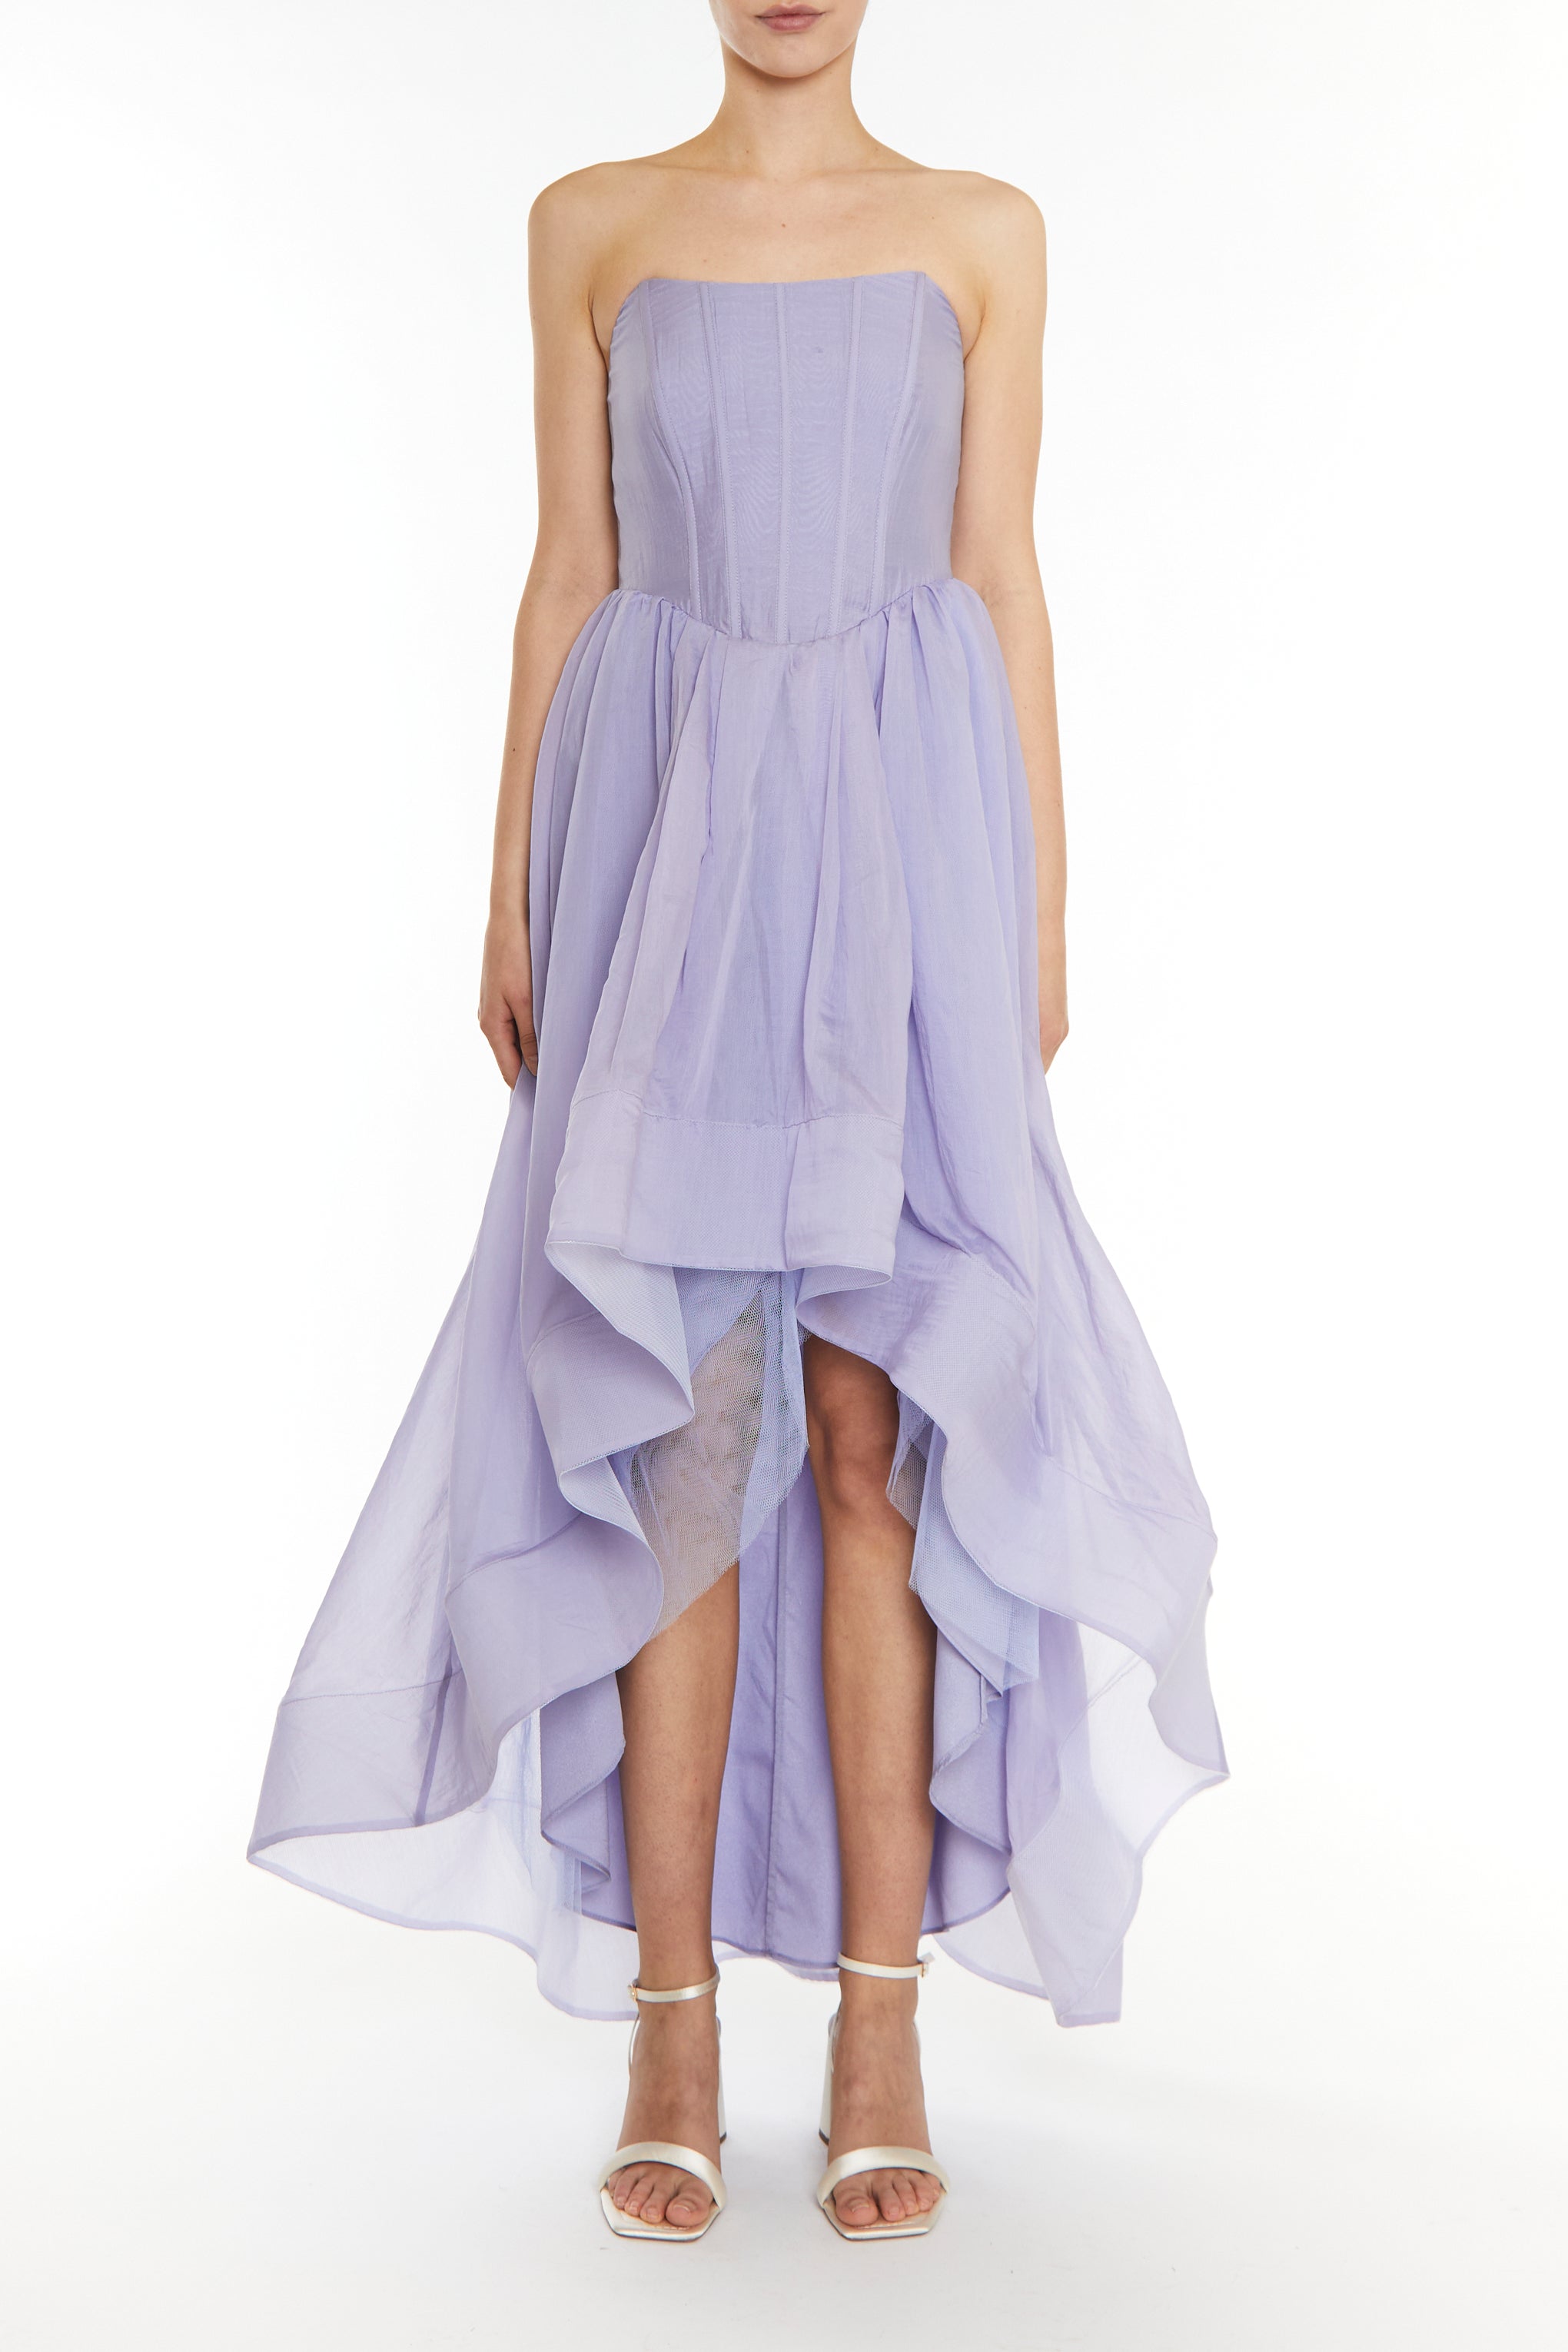 Winnie Hydrangea Corset Style Hi-Low Dress-image-1